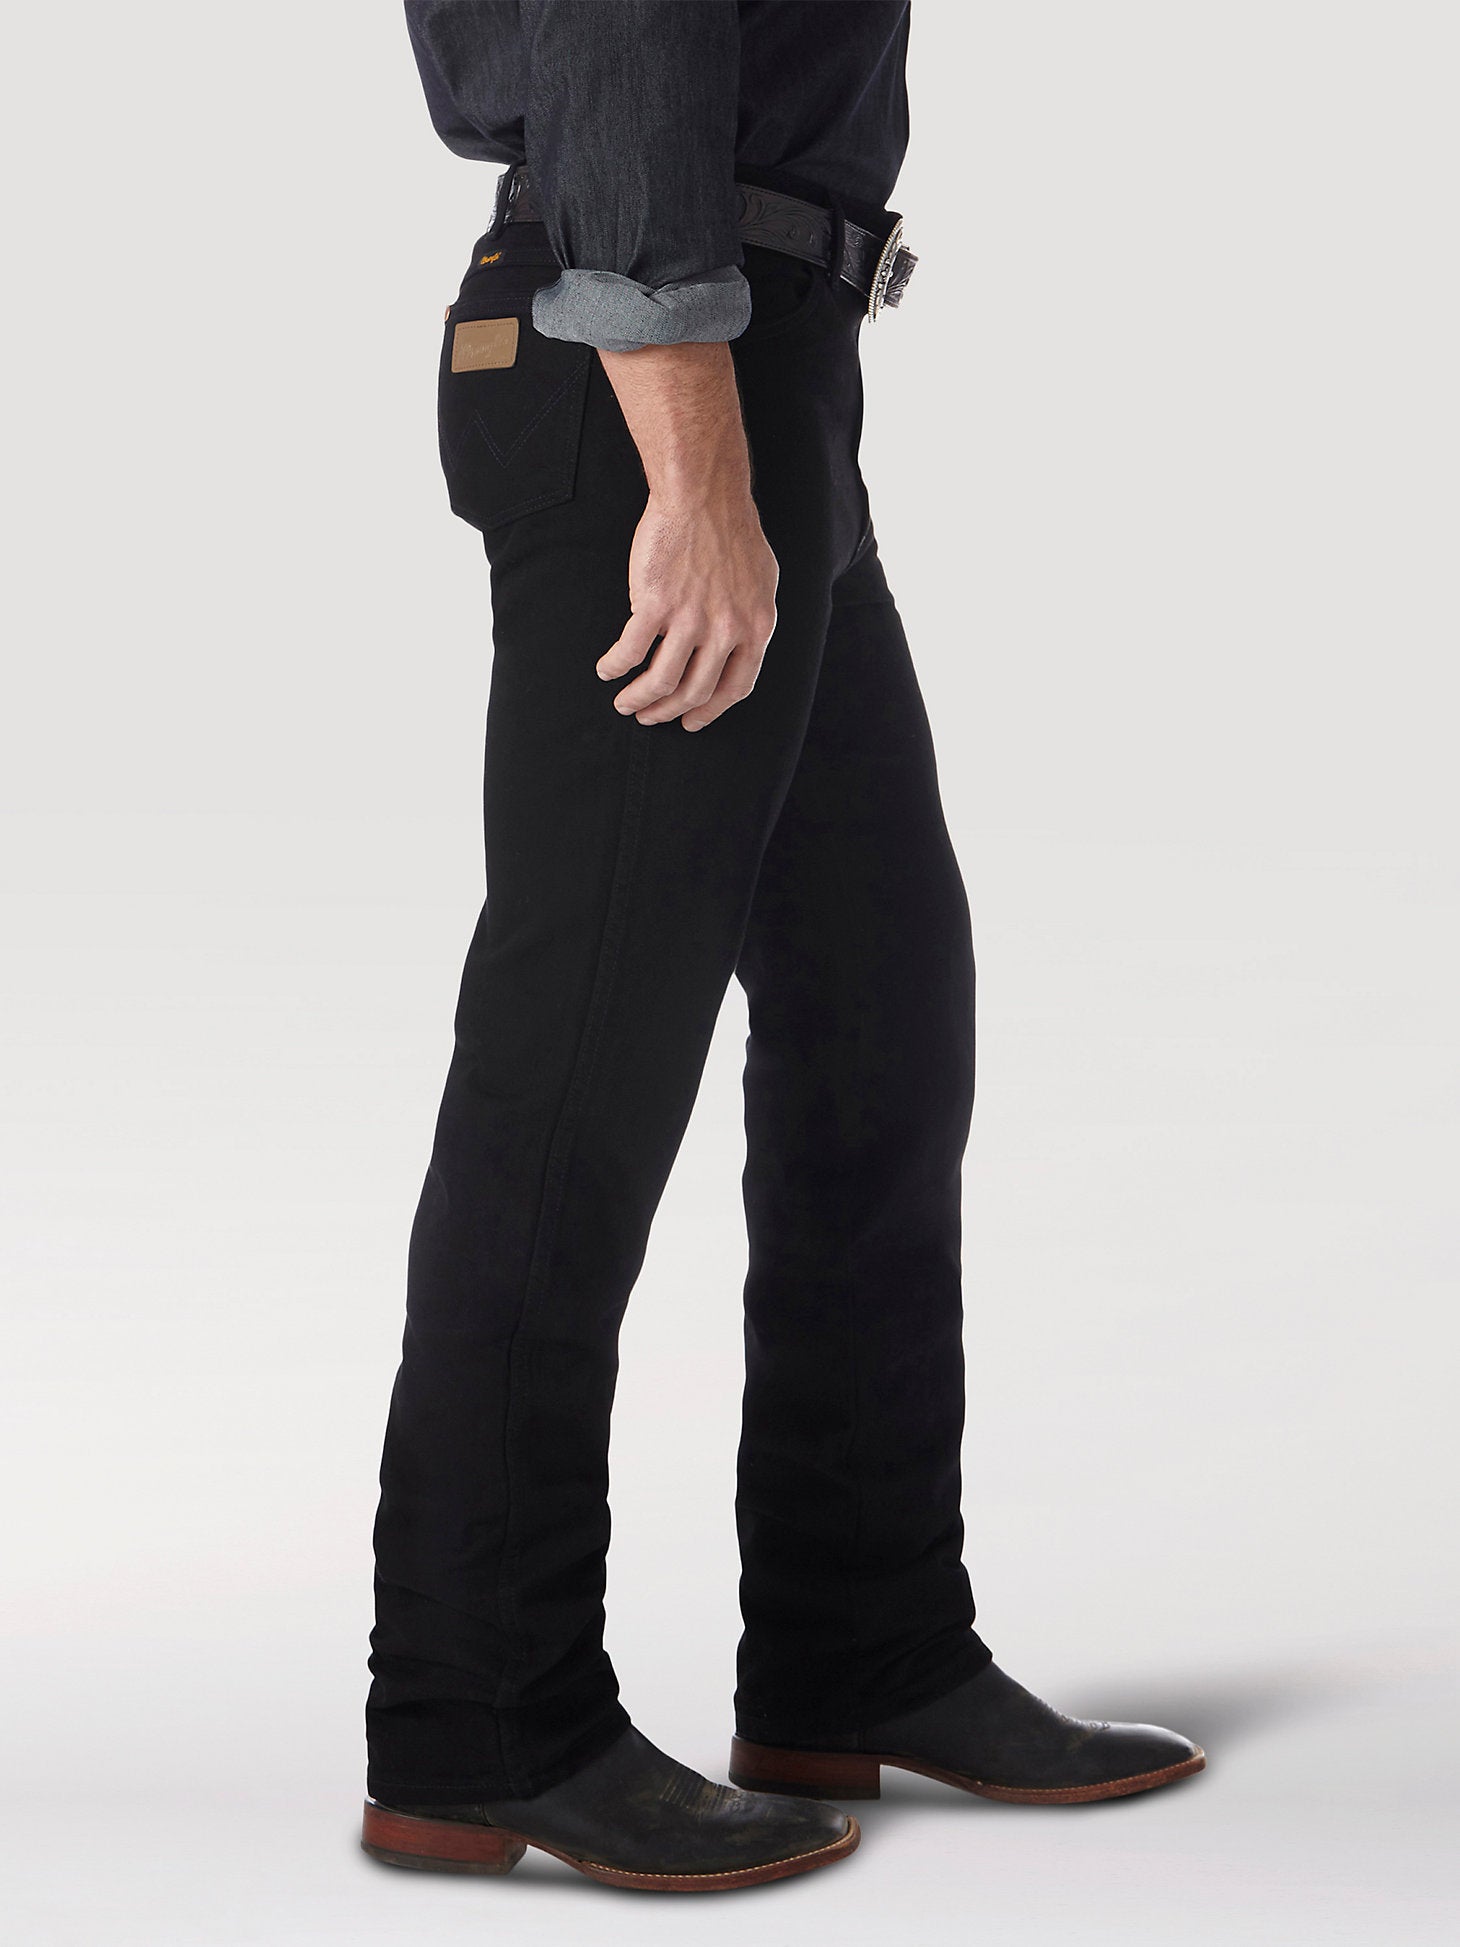 Men's Wrangler Original Cowboy Cut Heavyweight Denim Jeans SHADOW BLACK  32